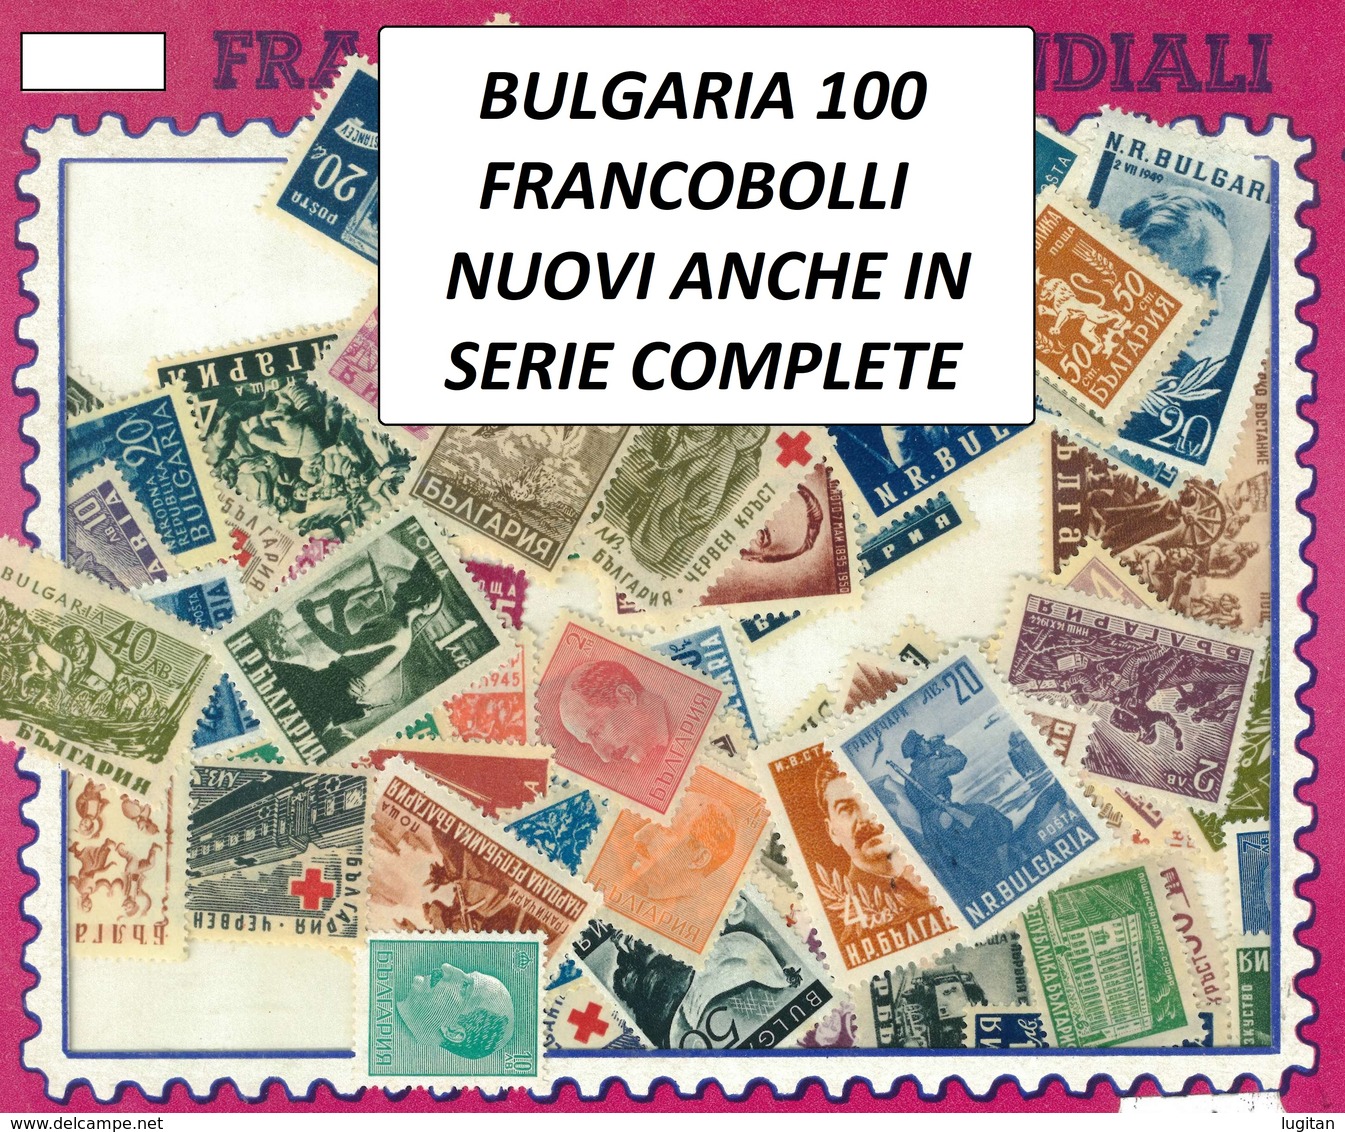 MIX DI 100 FRANCOBOLLI ASSORTITI SCELTI NUOVI DI BULGARIA - 100 BULGARIAN MINT STAMPS - Collections, Lots & Series